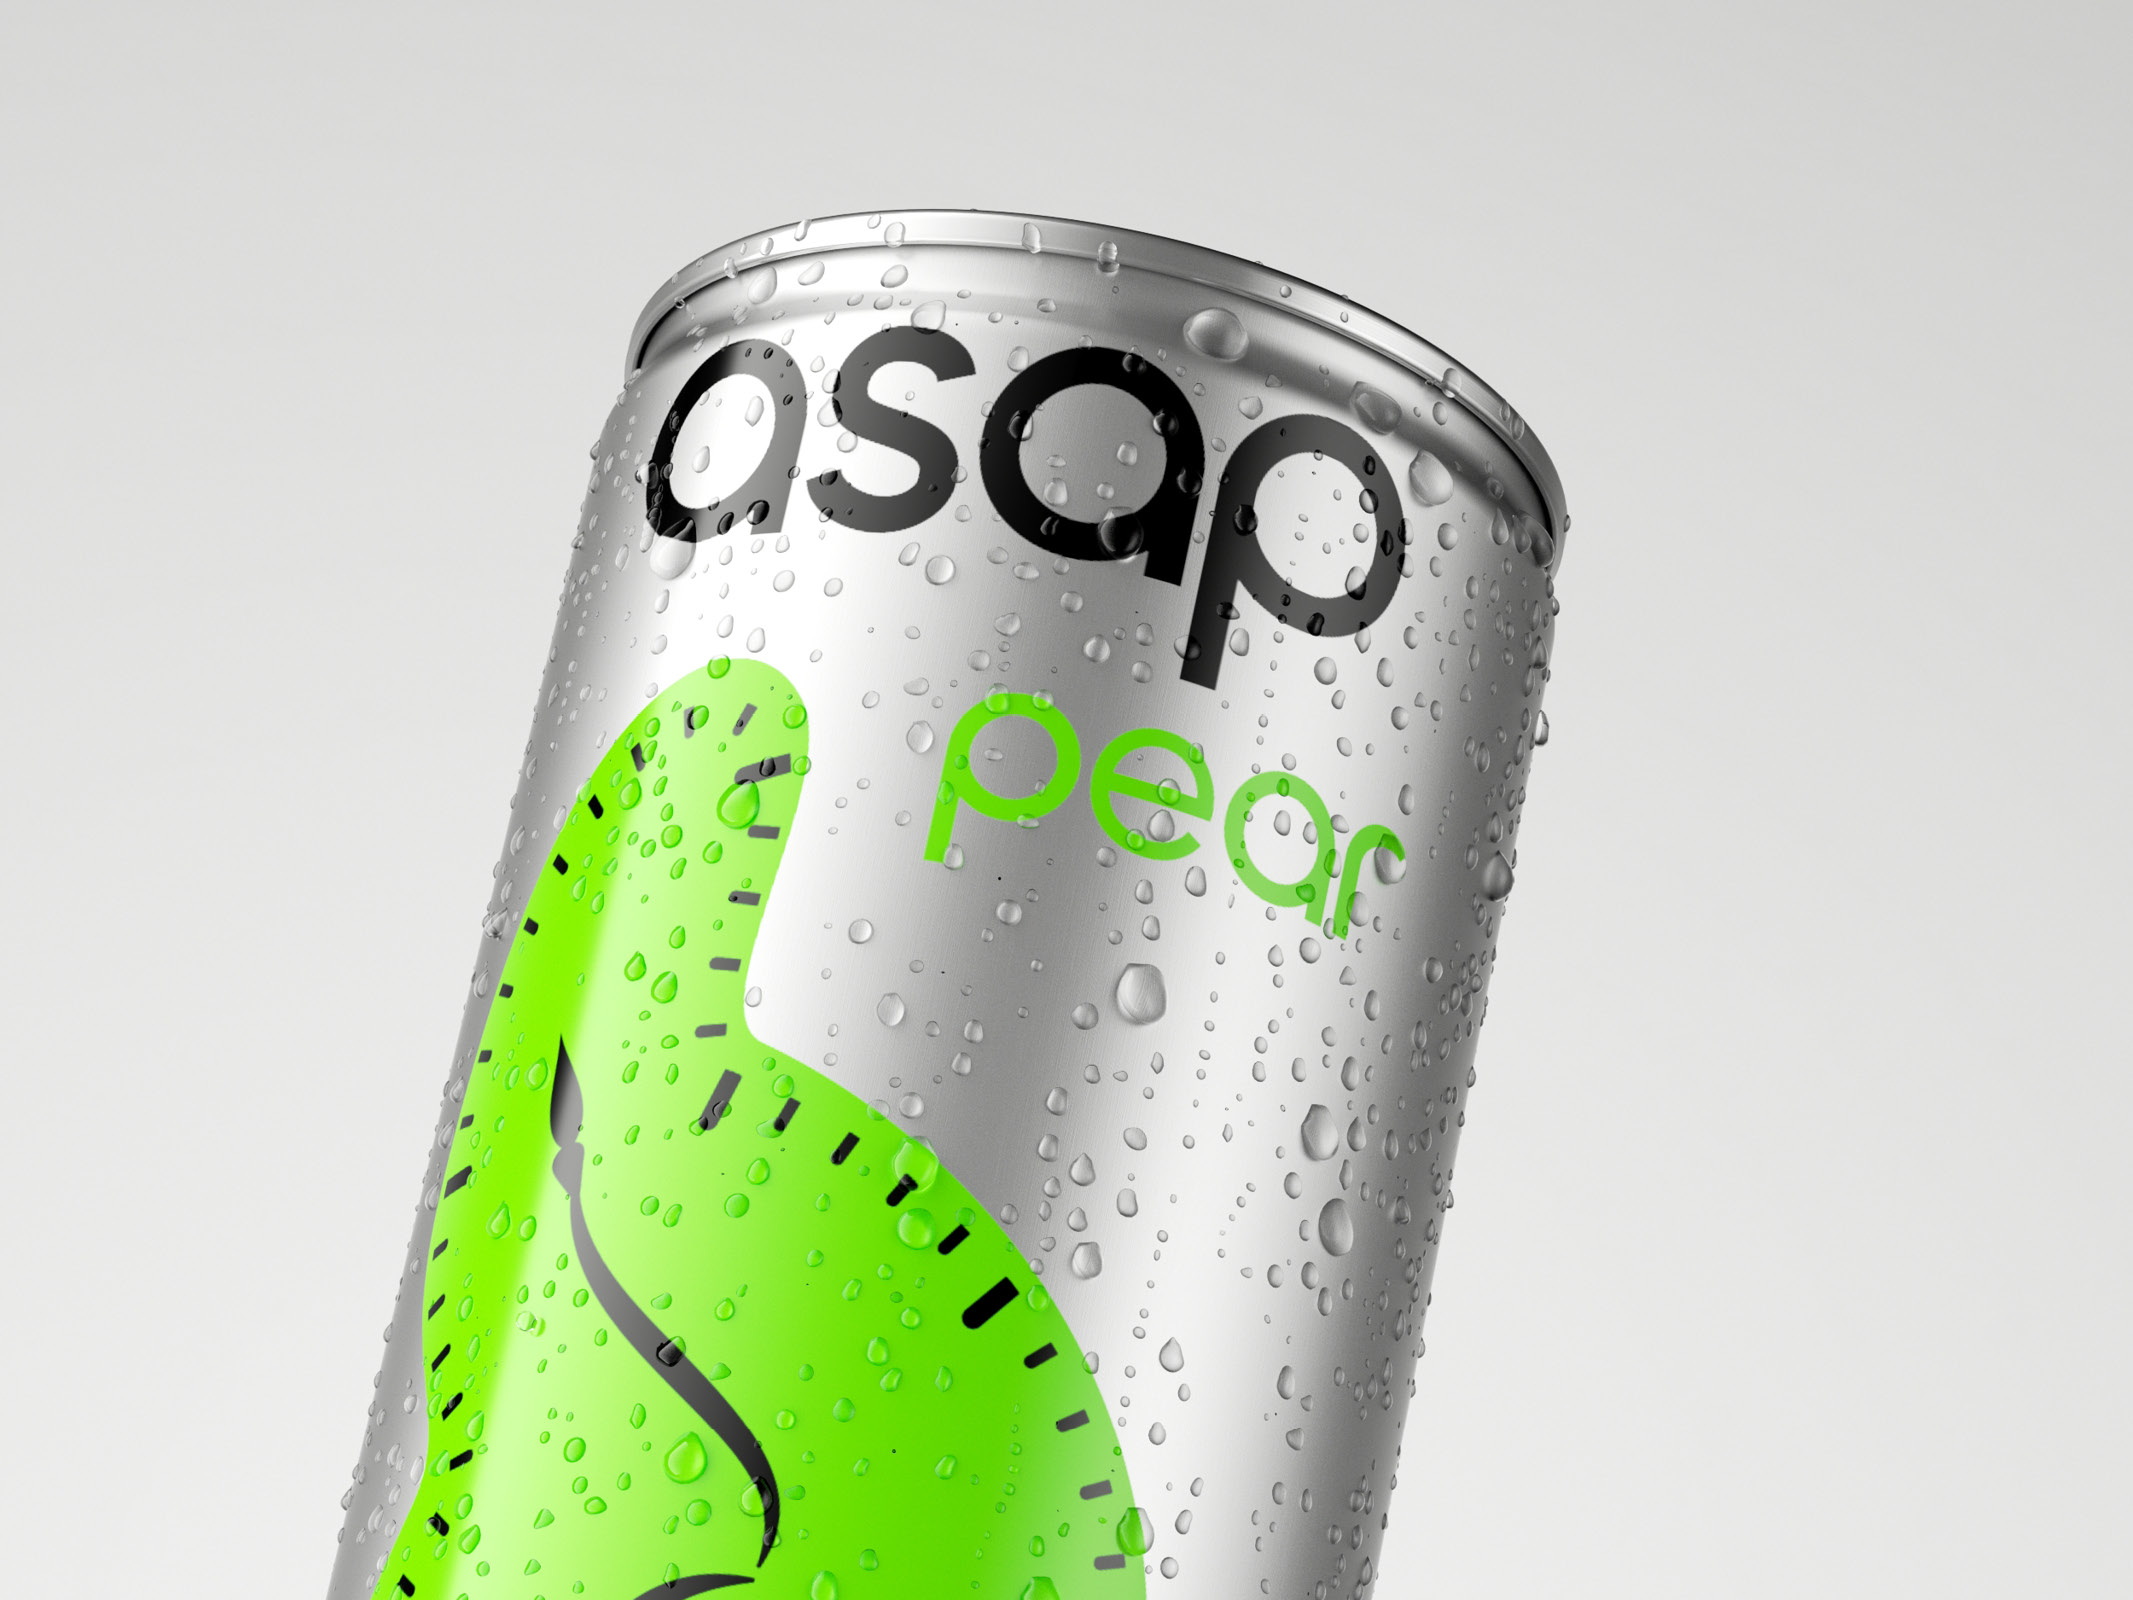 Asap Energy Drink Packaging Design Concept